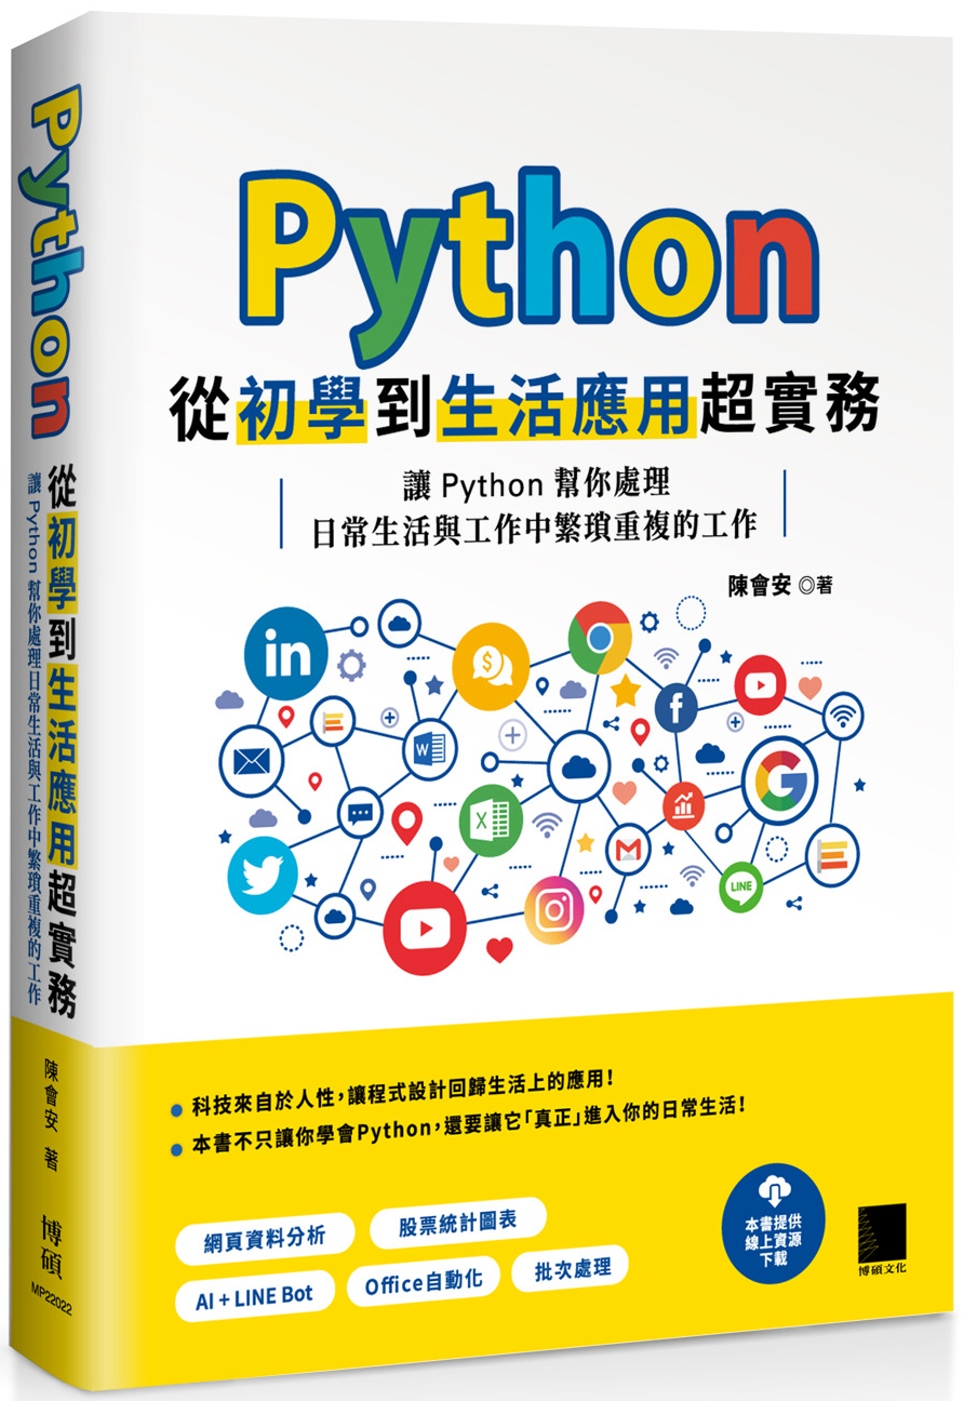 Python 從初學到生活應用超...